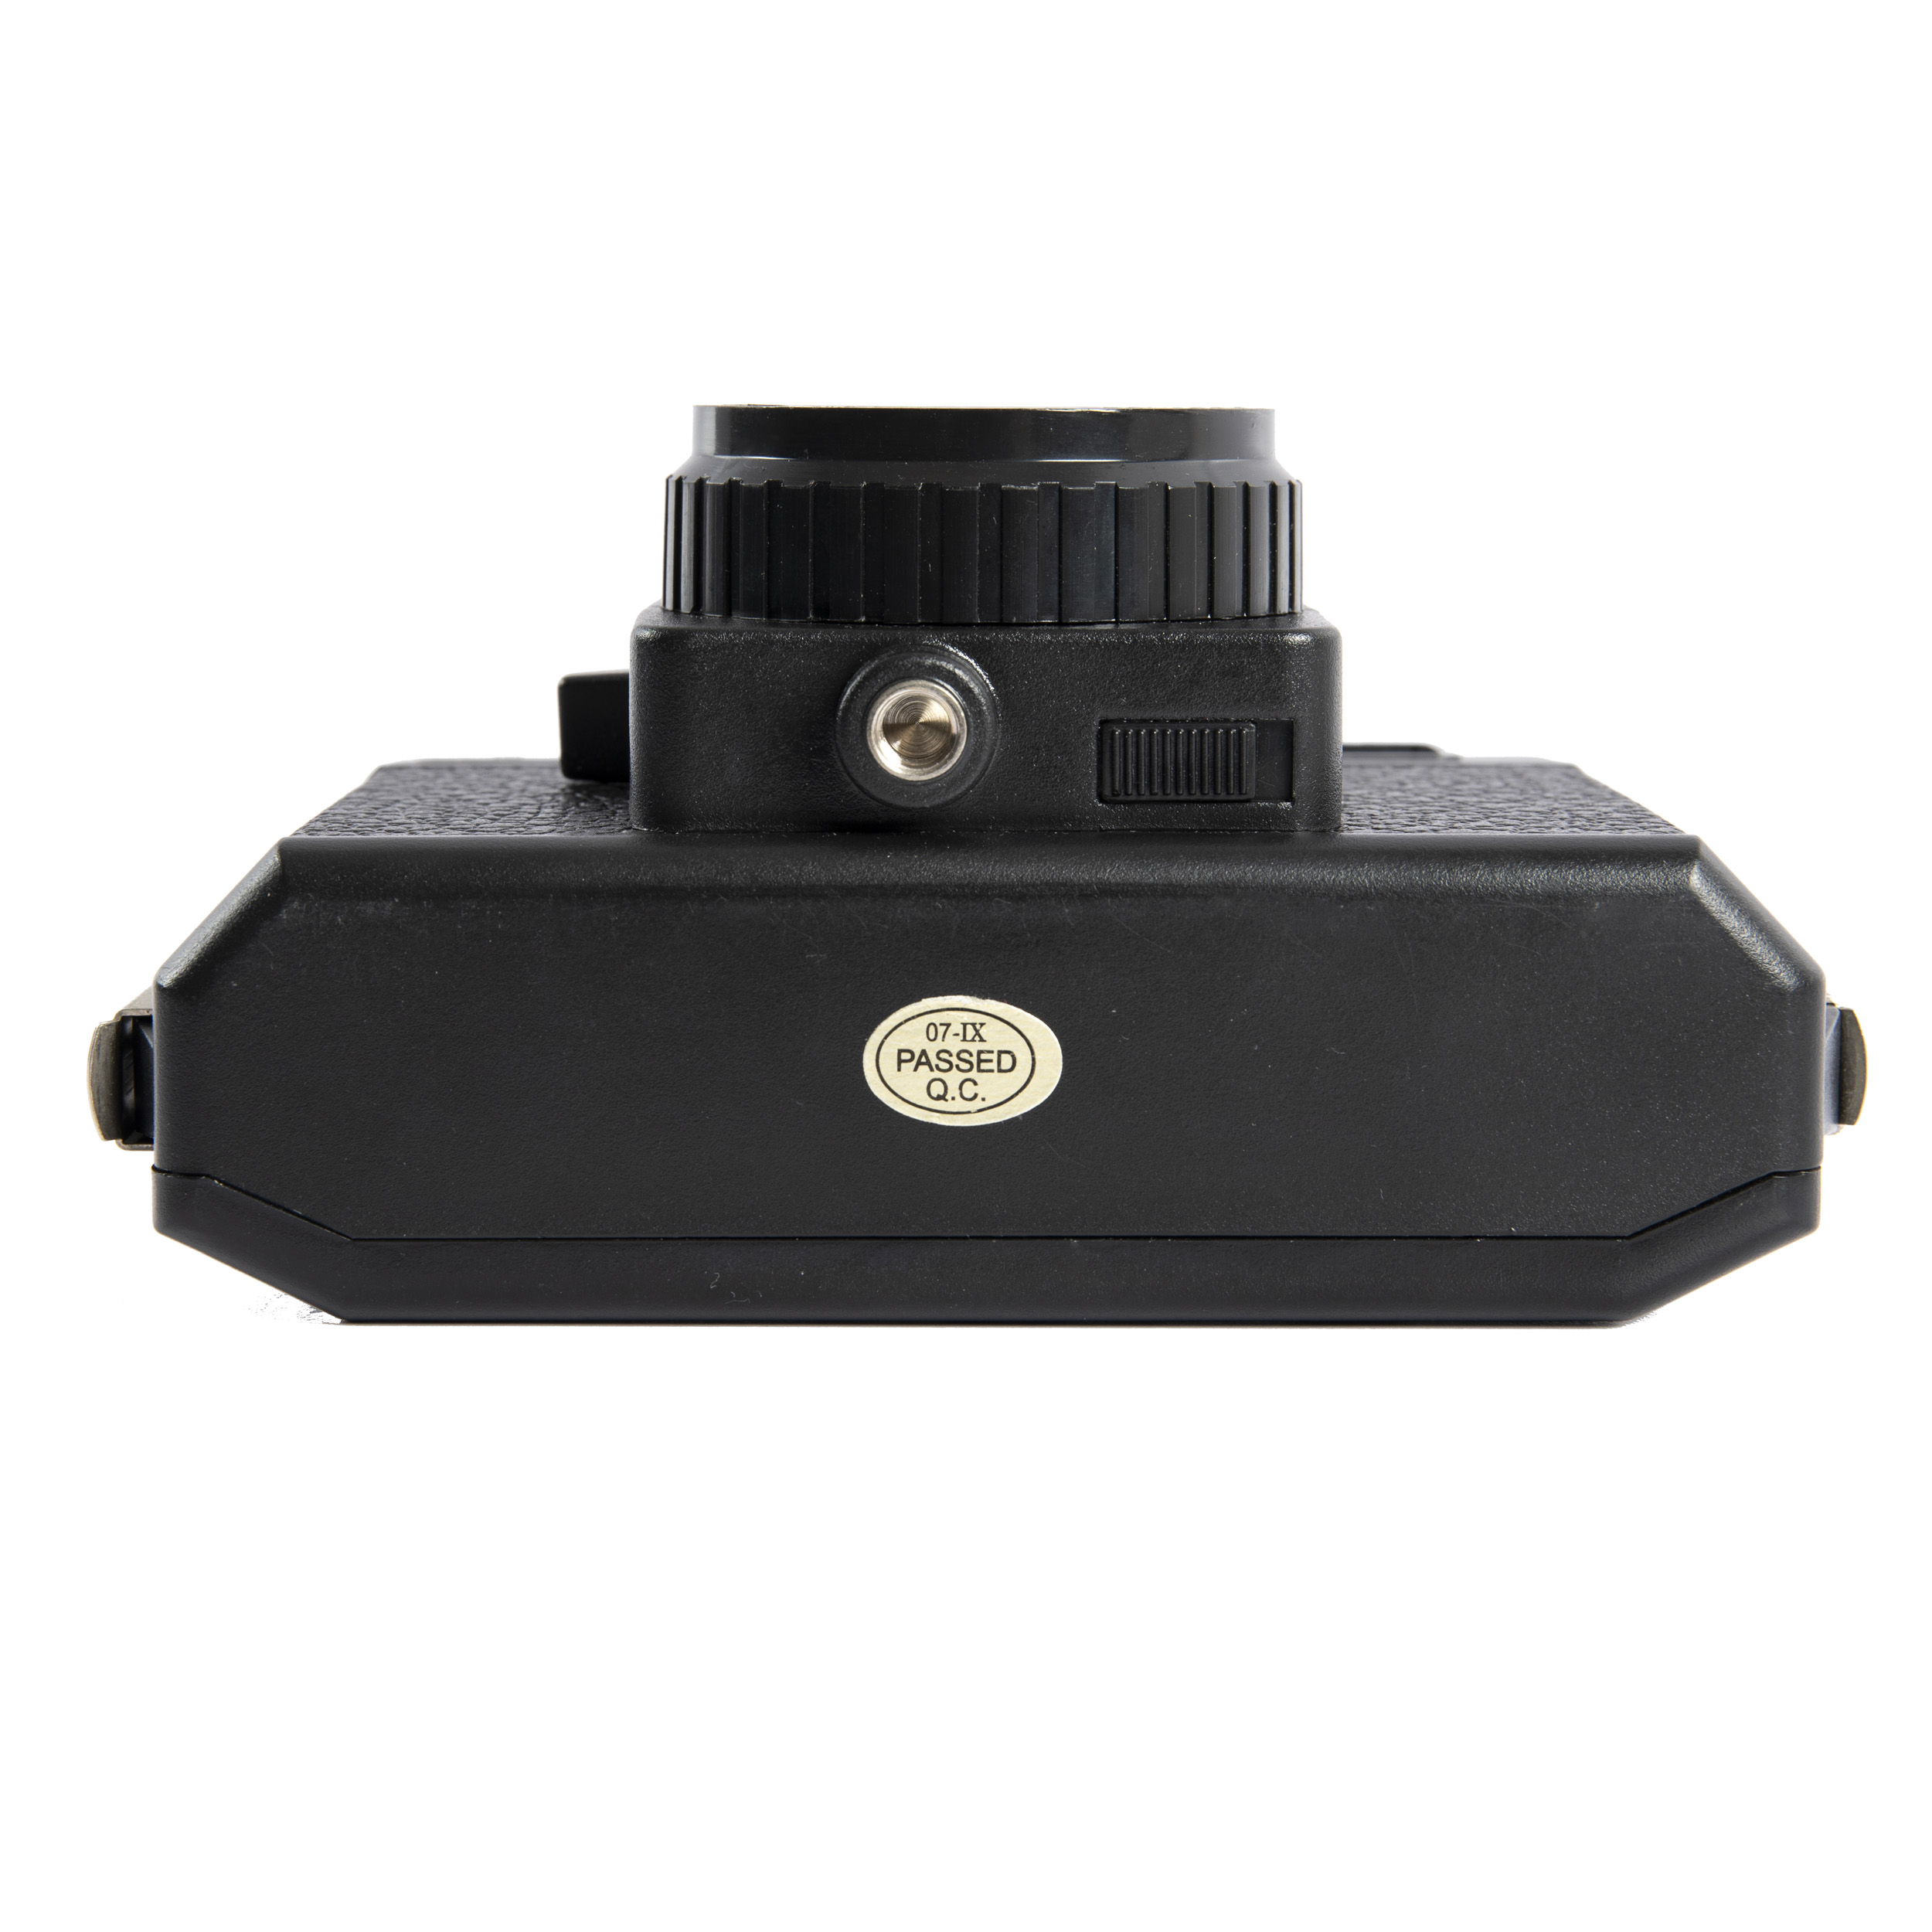 HOLGA 120PC Black Pinhole Camera Lomo Medium Format Film Camera Holga 120 PC